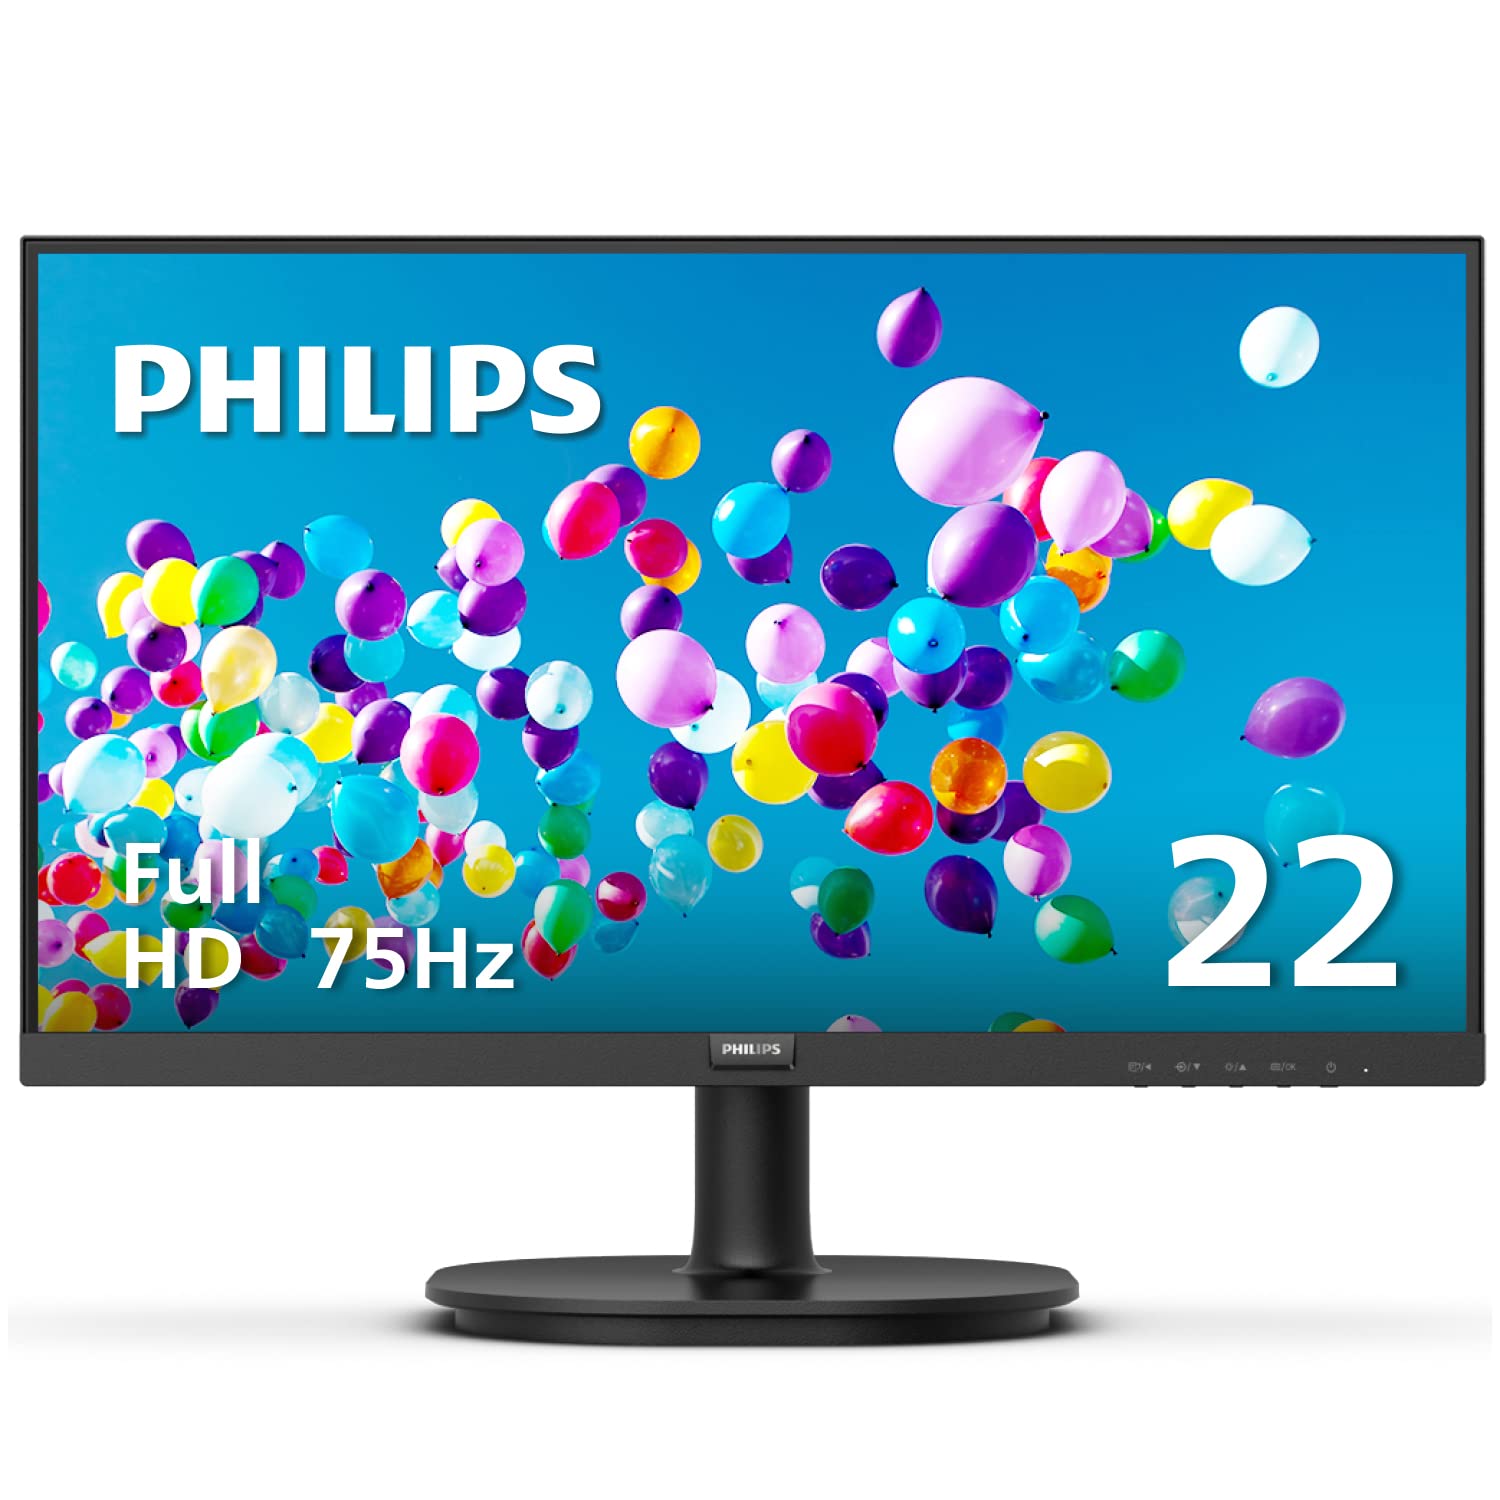 Philips Computer Monitors Филипс Чистый 2